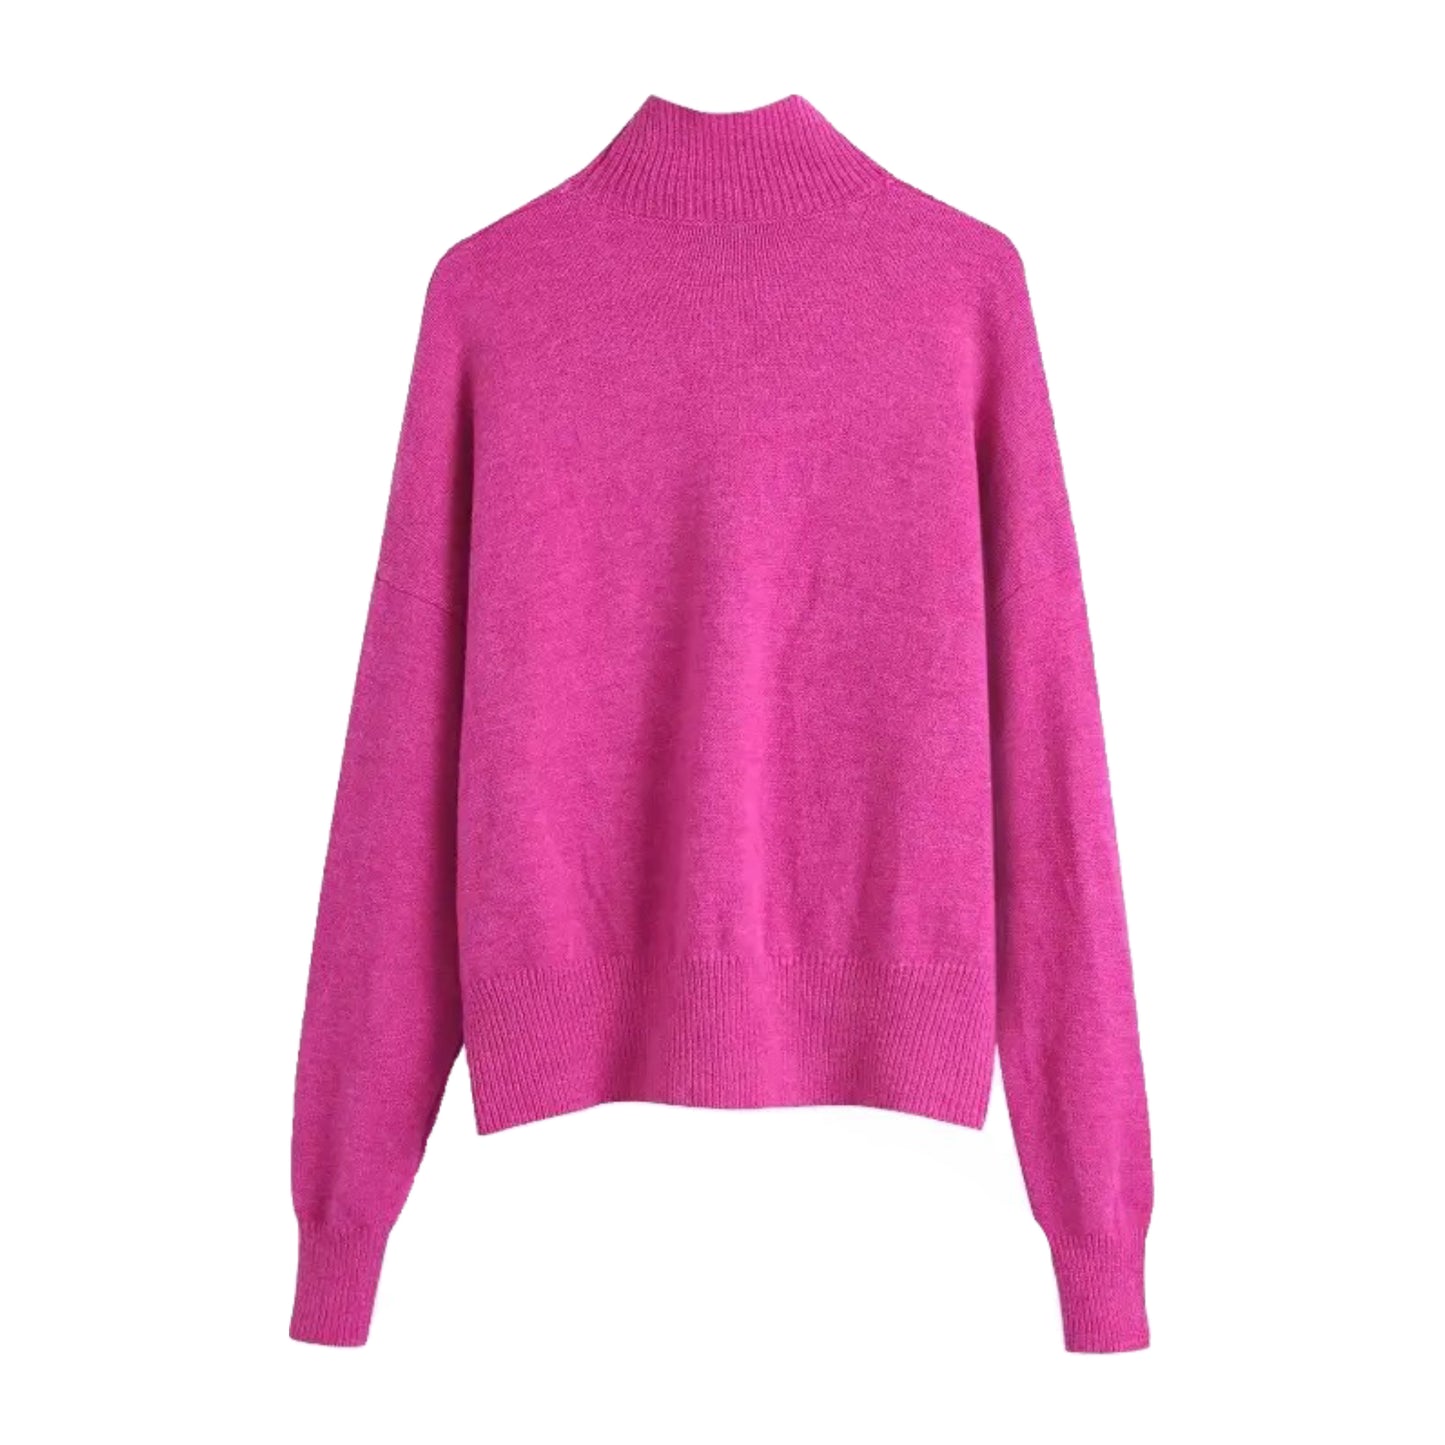 Dark Pink Knit Turtleneck Pull Over Sweater